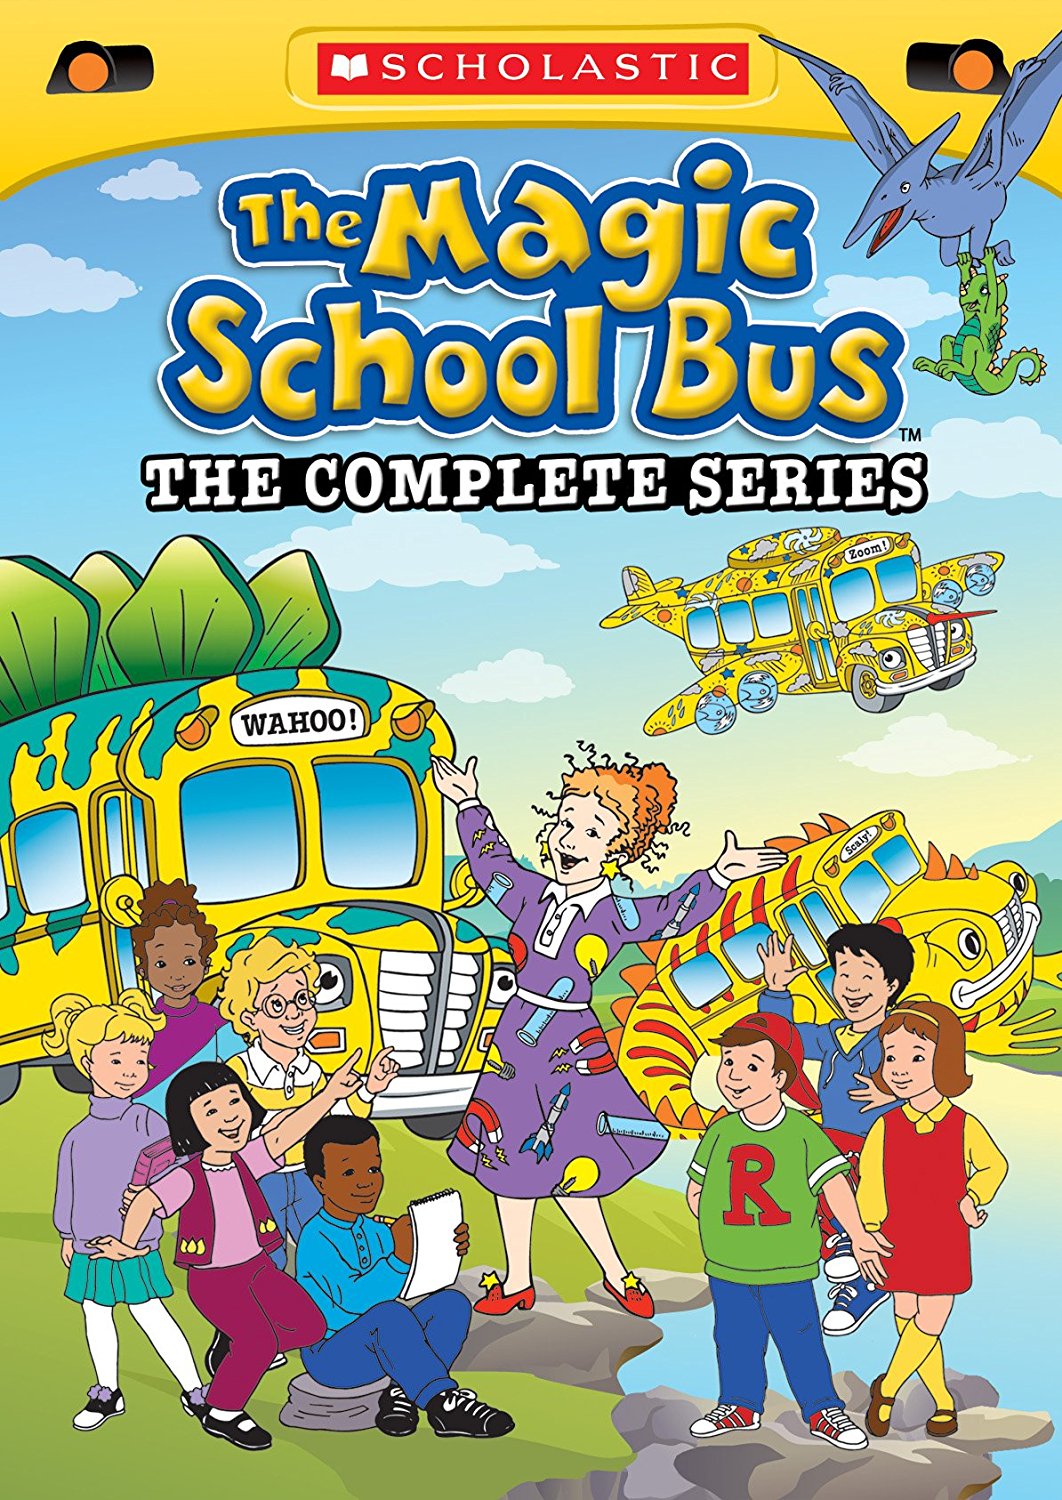 The Magic School Bus 1994 Cartoon is still great edutainment